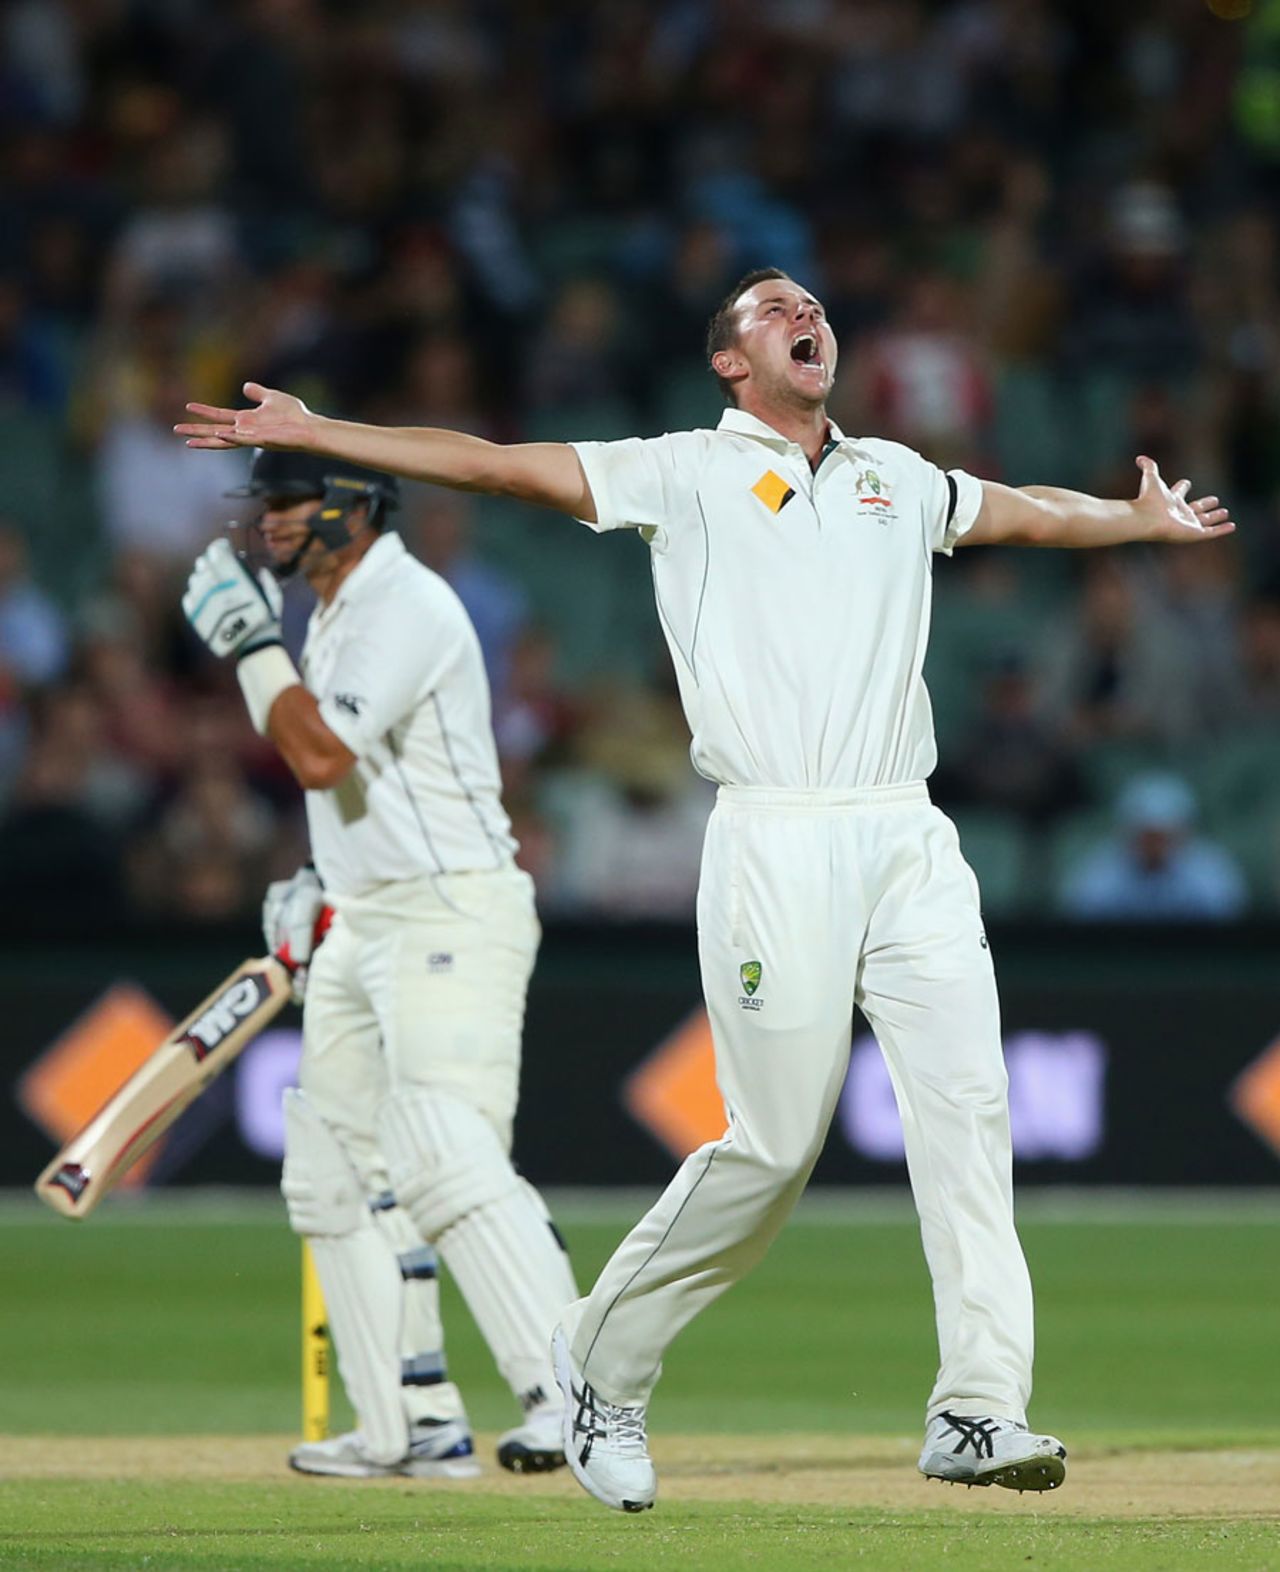 Josh Hazlewood trapped Ross Taylor lbw, Australia v New Zealand, 3rd Test, Adelaide, 2nd day, November 28, 2015